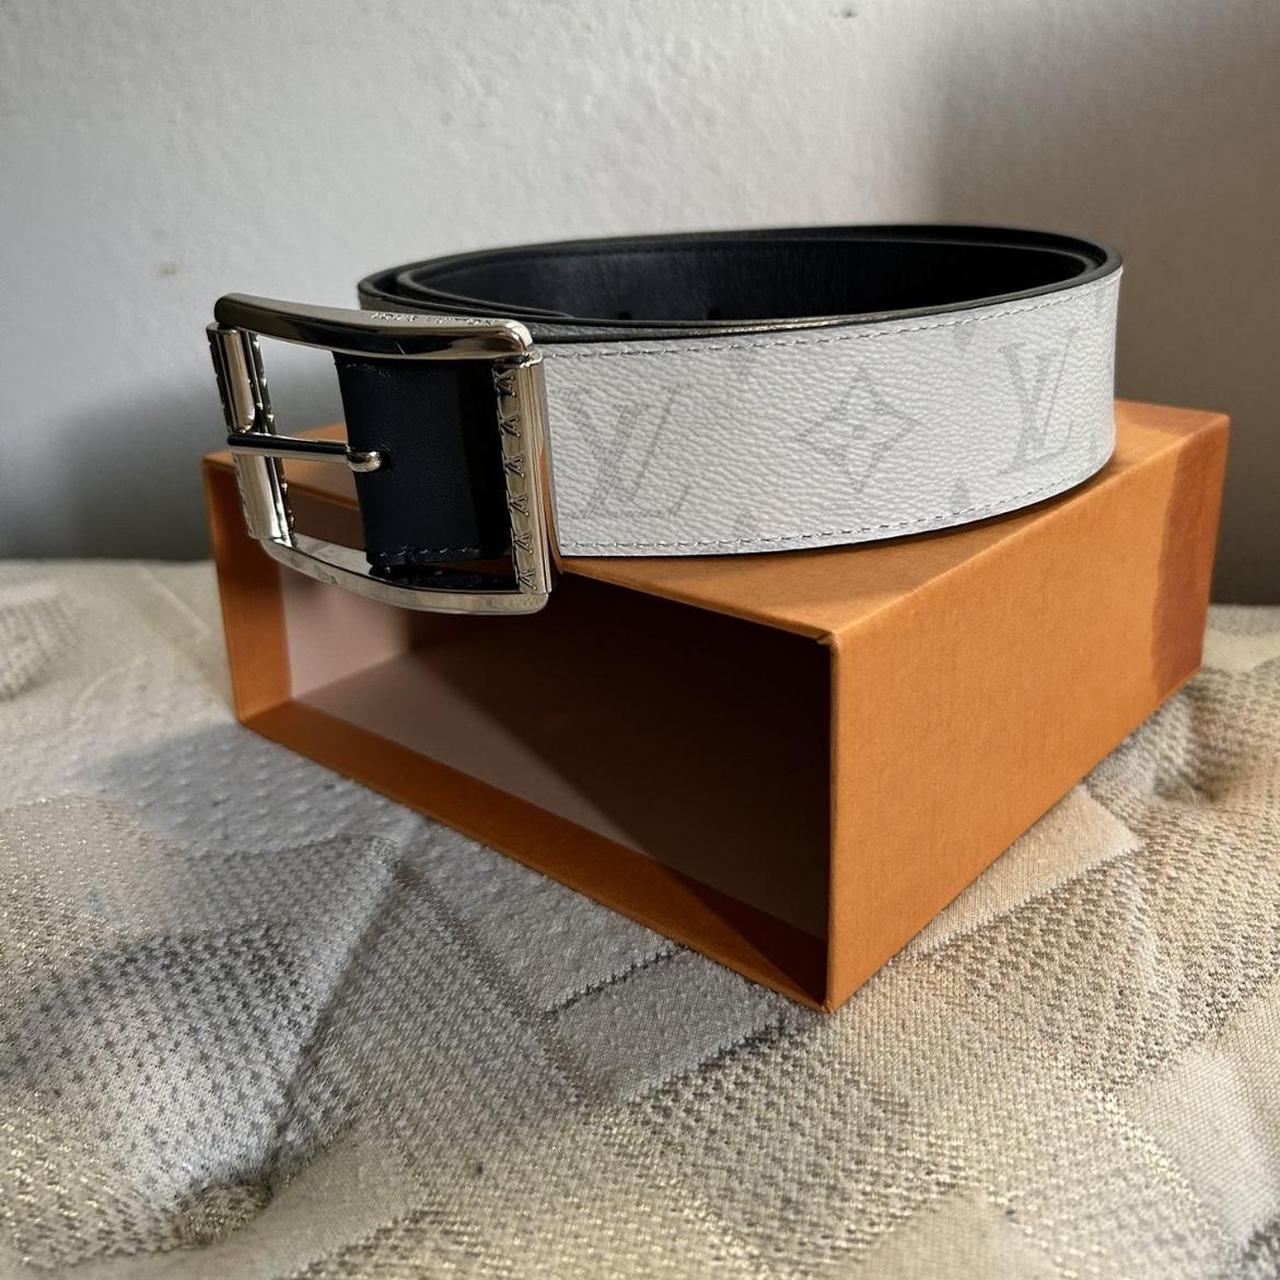 Genuine Louis Vuitton Belt. Never used as was too - Depop